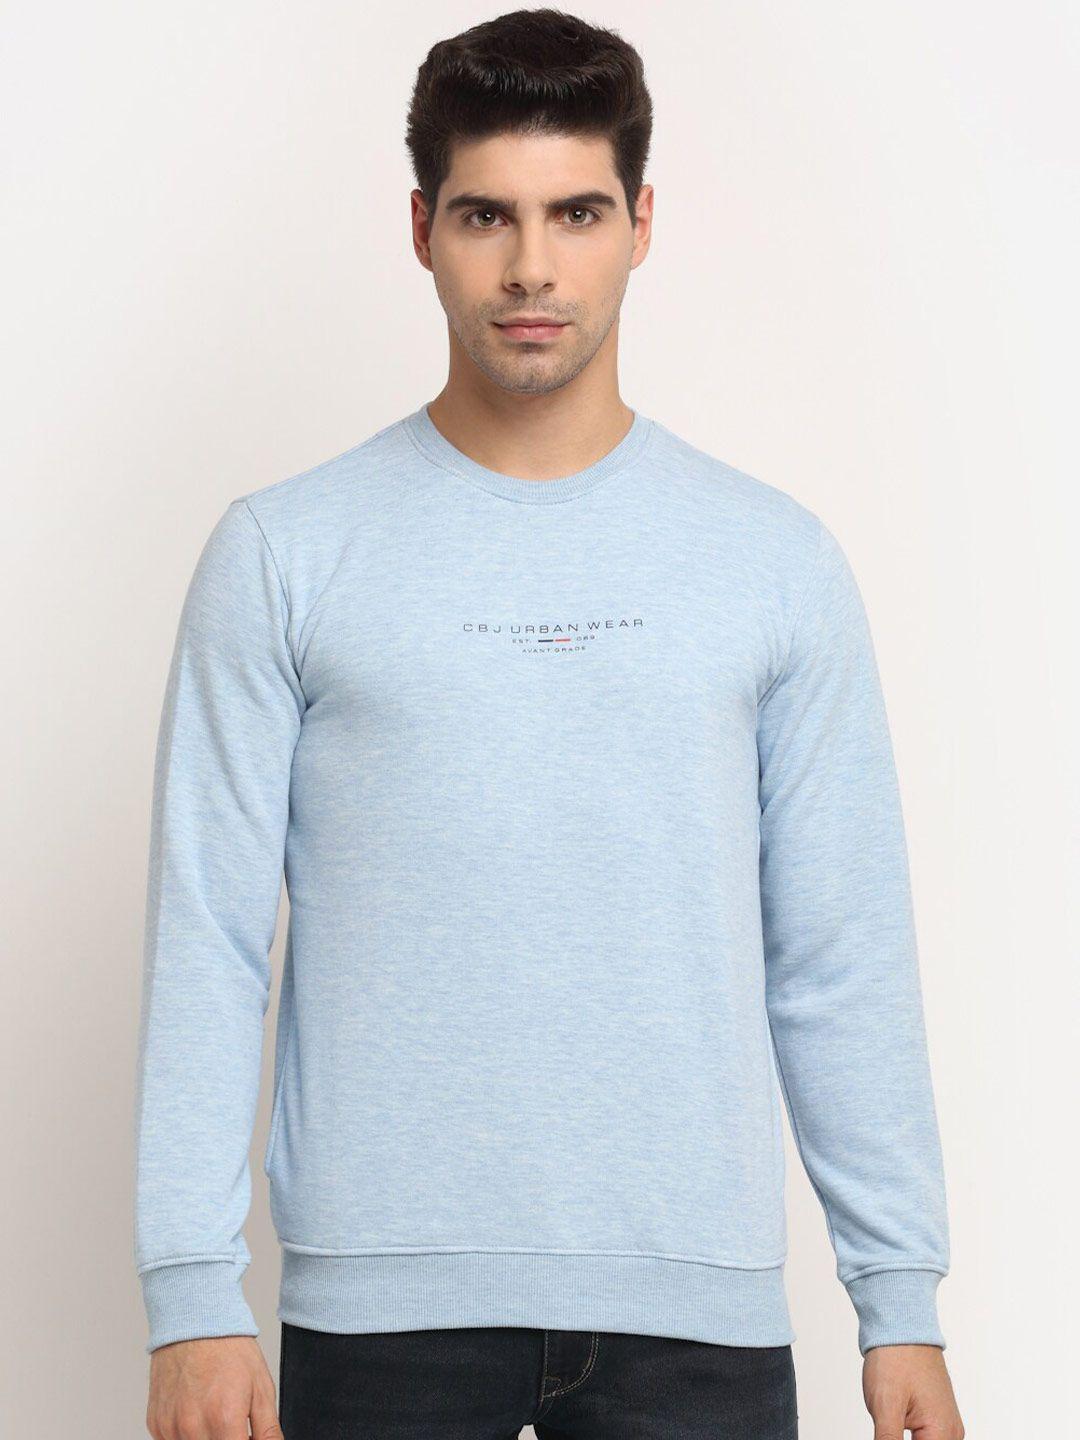 cantabil-men-blue-sweatshirt